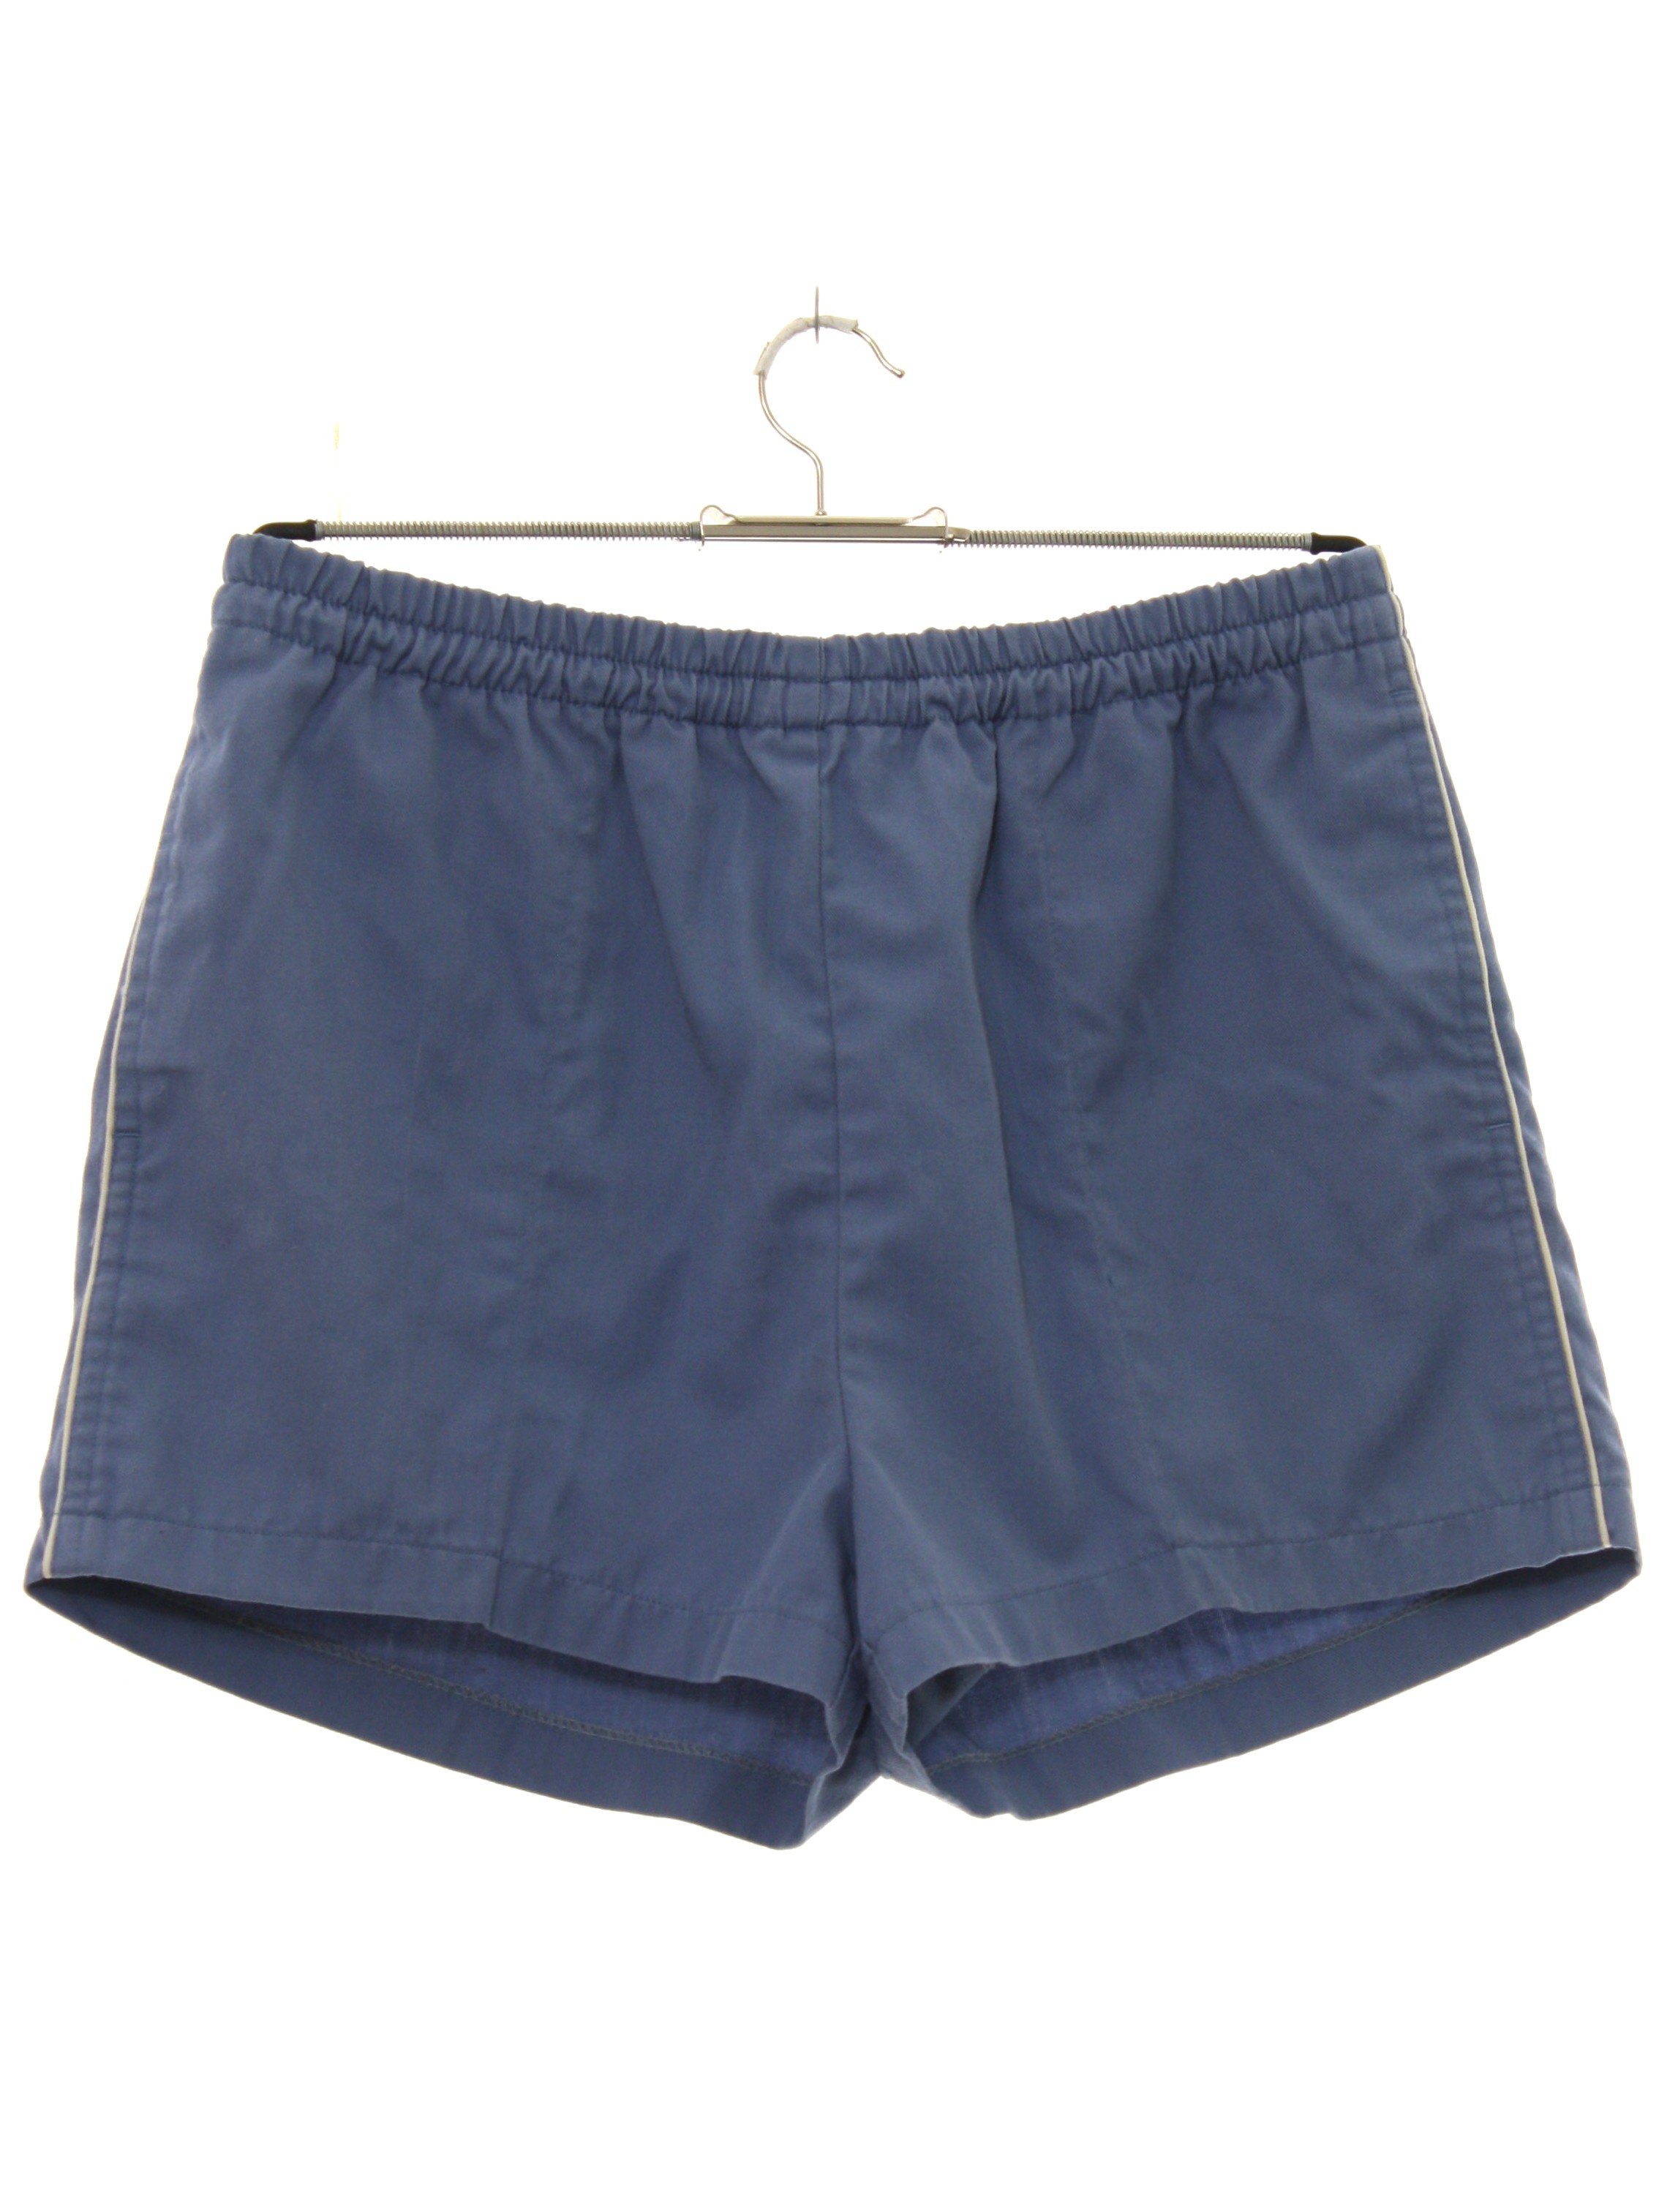 Retro 80's Shorts: 80s -Winner Wear by Kennington- Mens powder blue ...